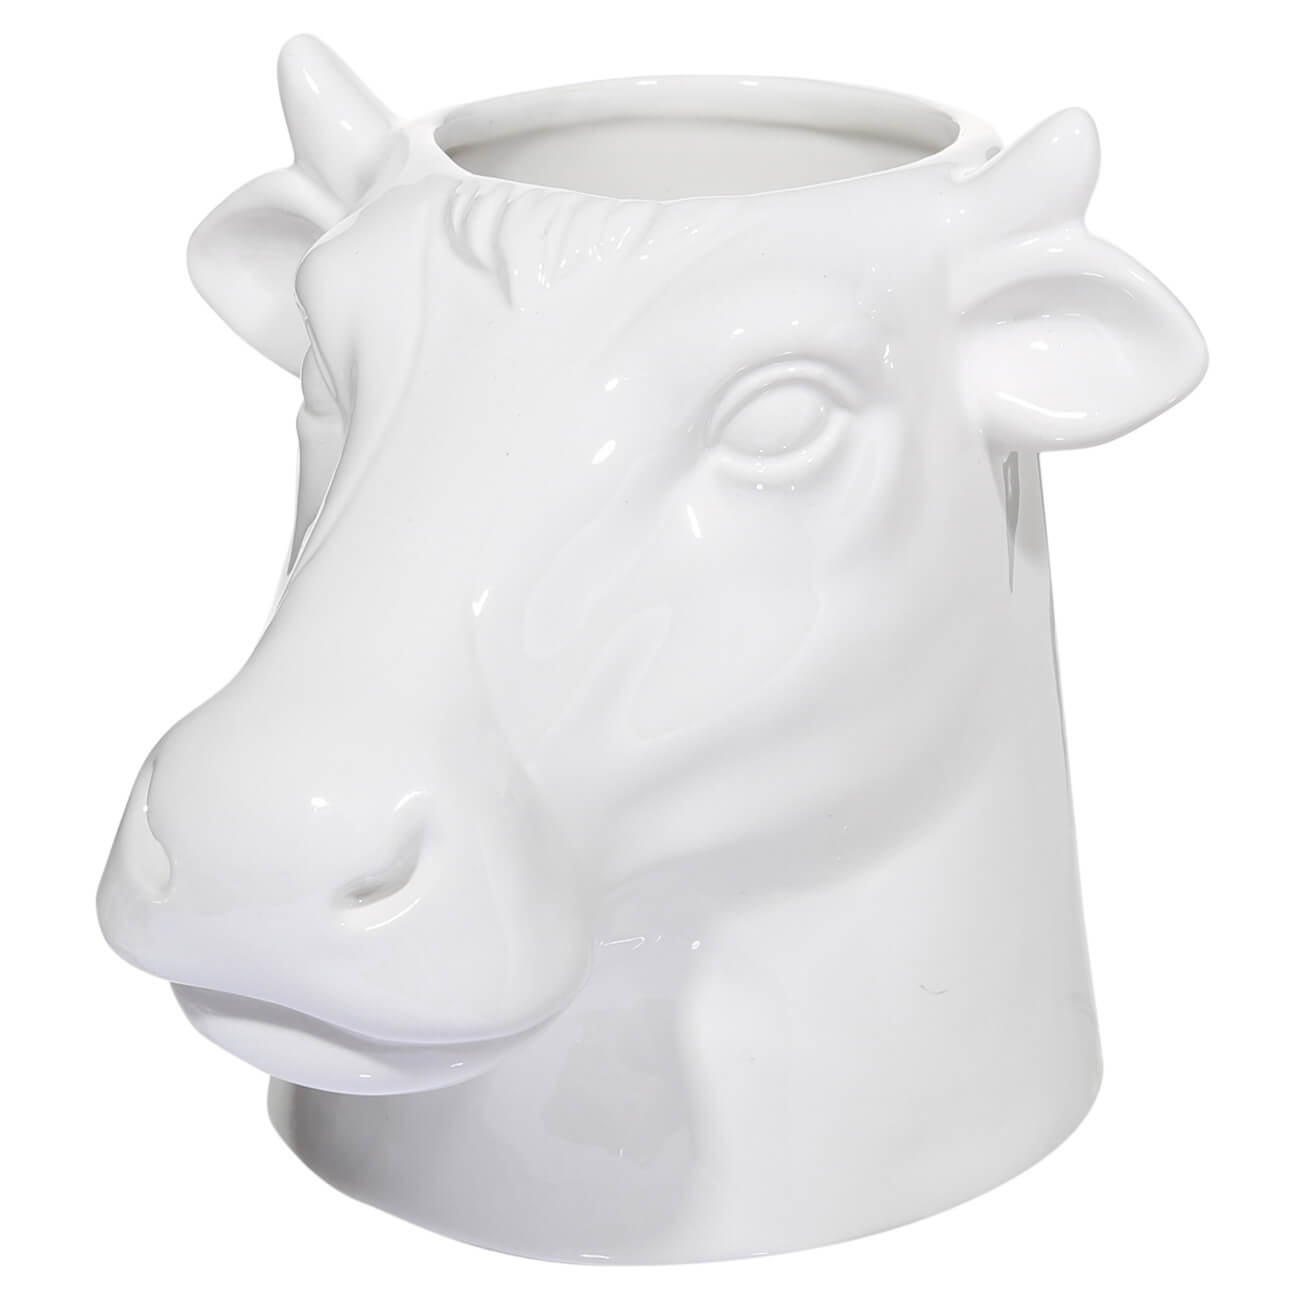 Подставка для кухонных принадлежностей, 15 см, керамика, белая, Корова, Polar bull подставка для кухонных принадлежностей 15 см керамика белая корова polar bull